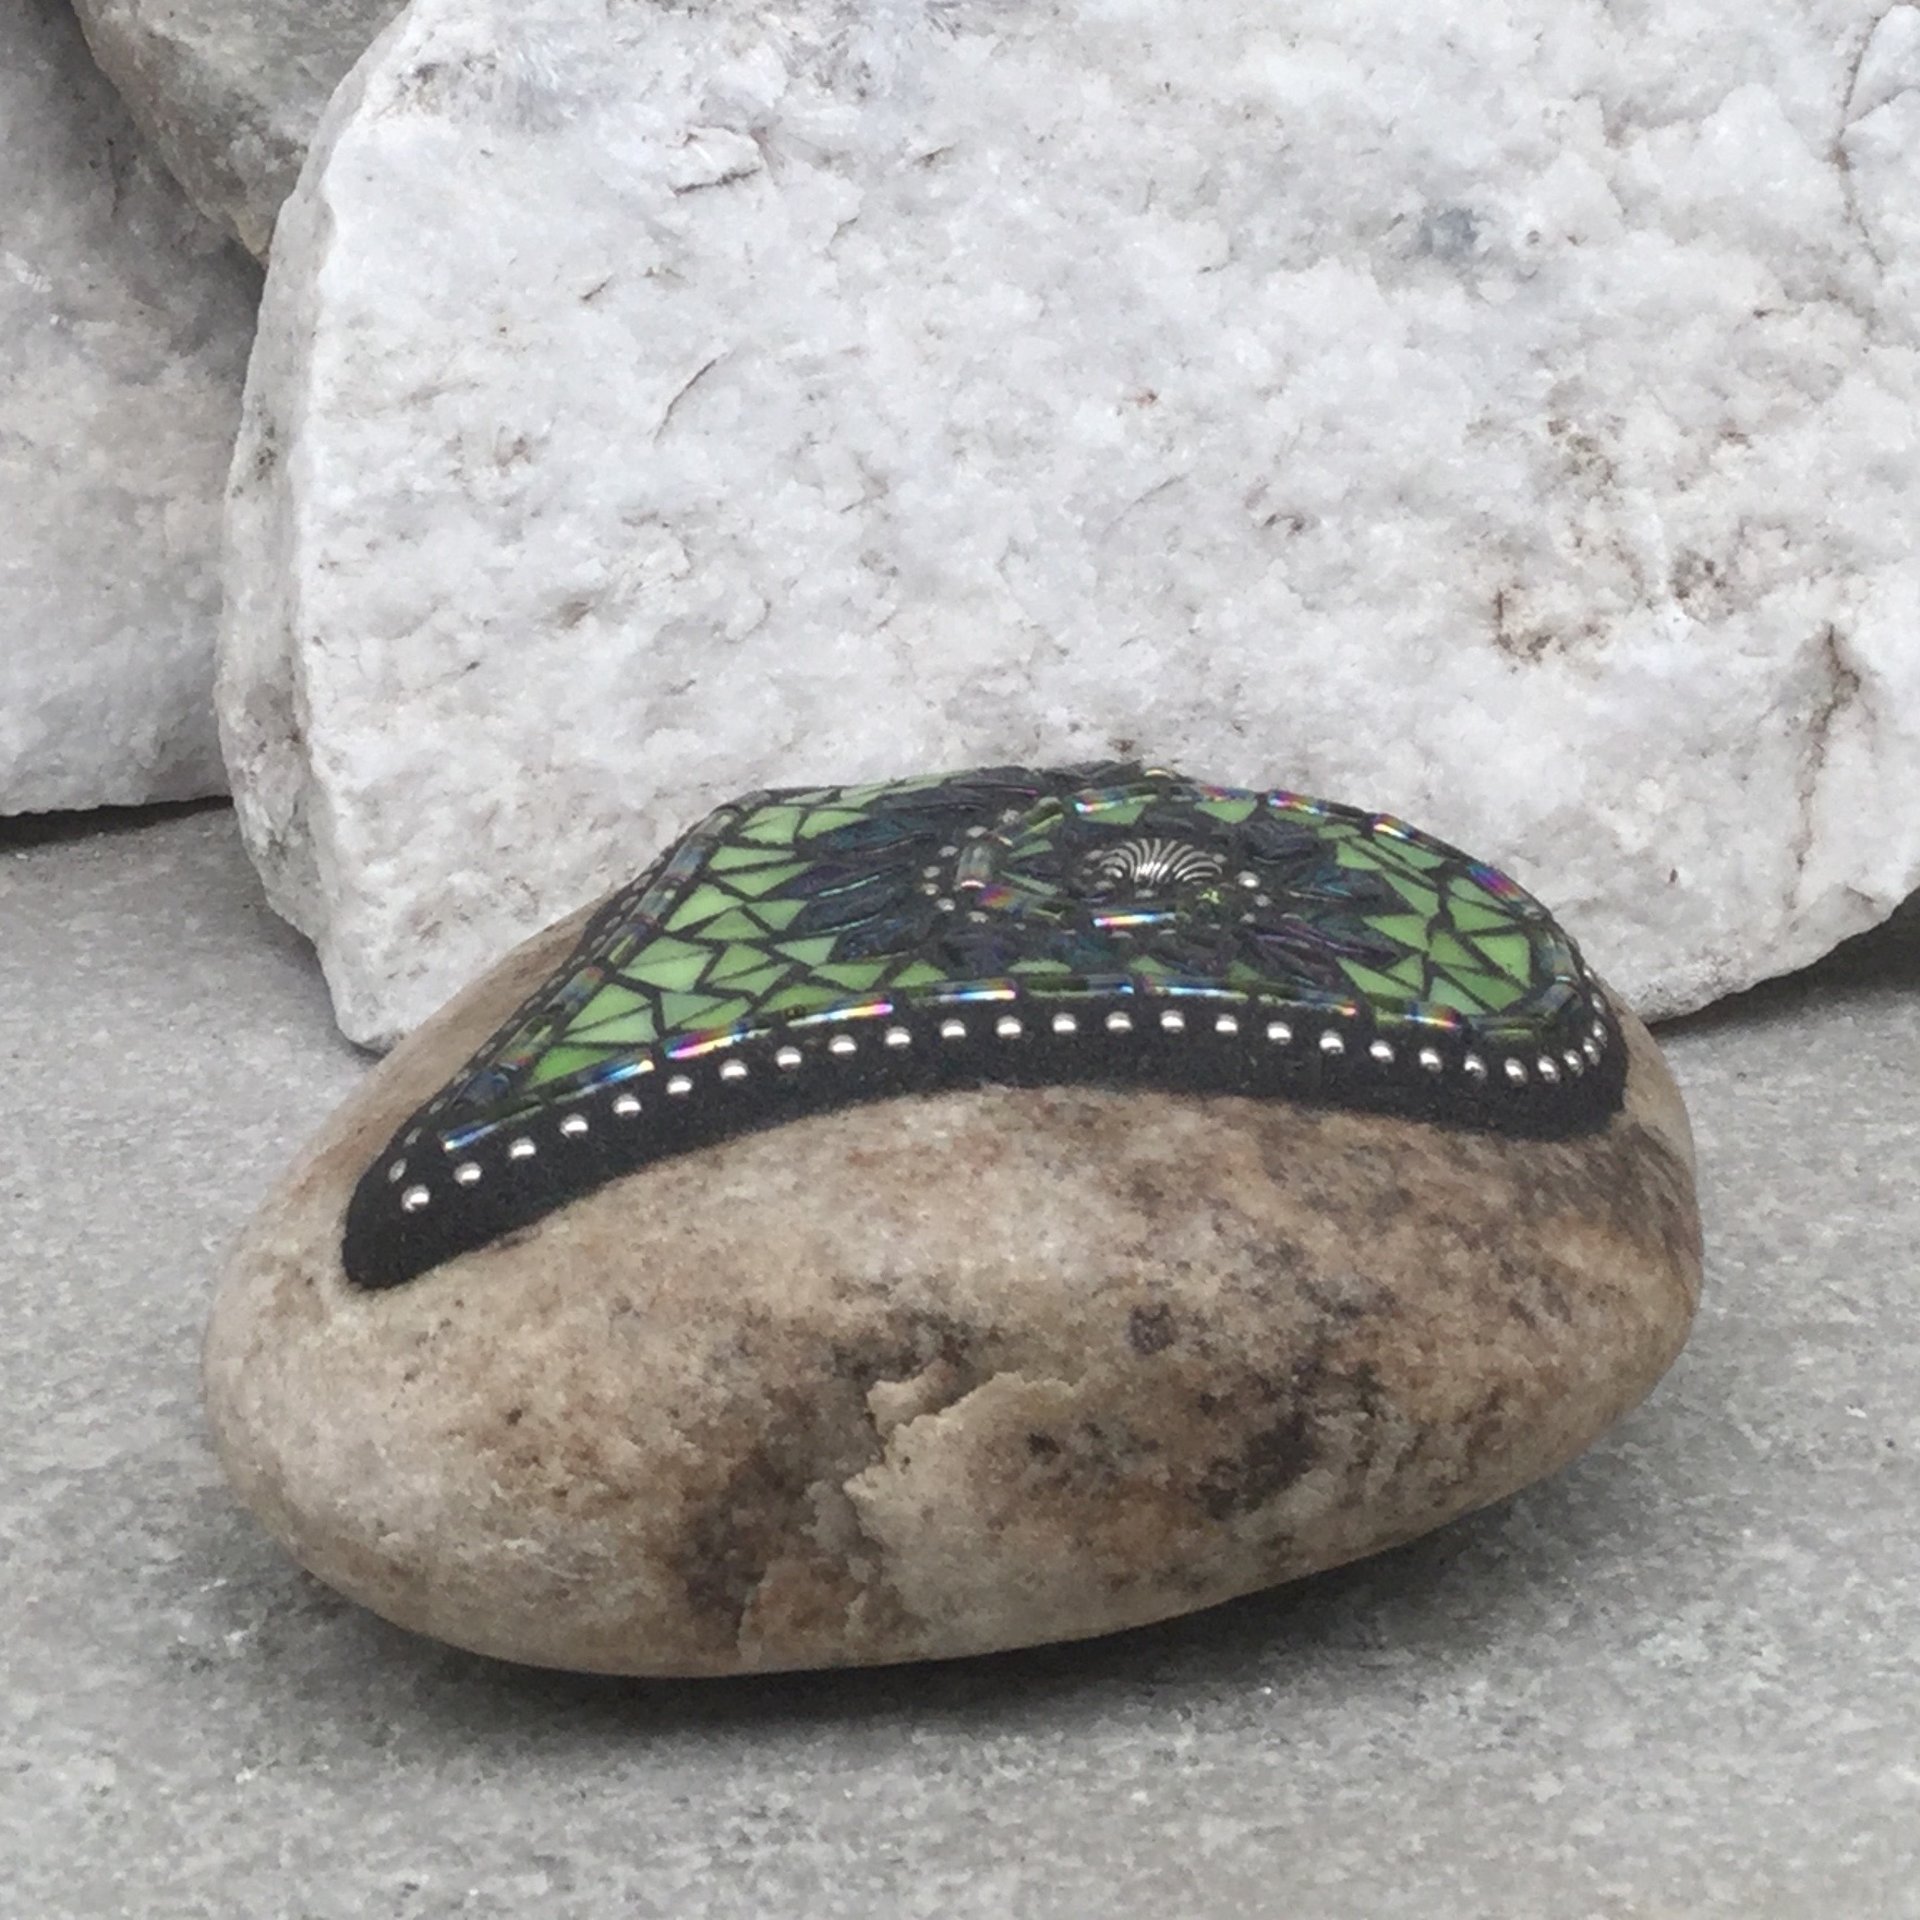 Lime Green Leaf Heart, Garden Stone, Mosaic, Garden Decor